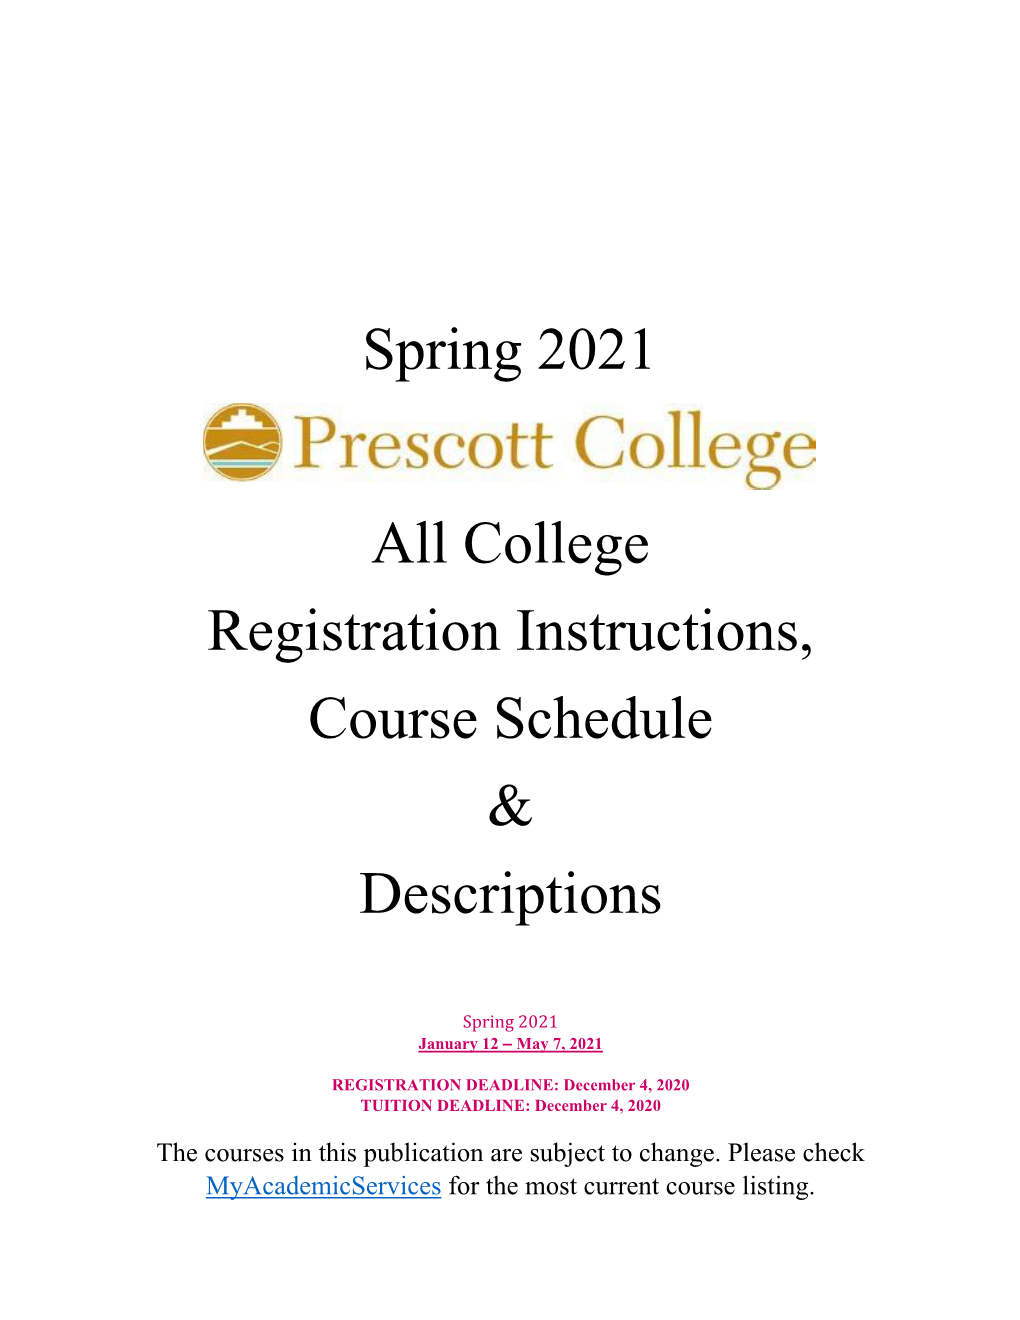 Spring 2021 All College Registration Instructions, Course Schedule & Descriptions